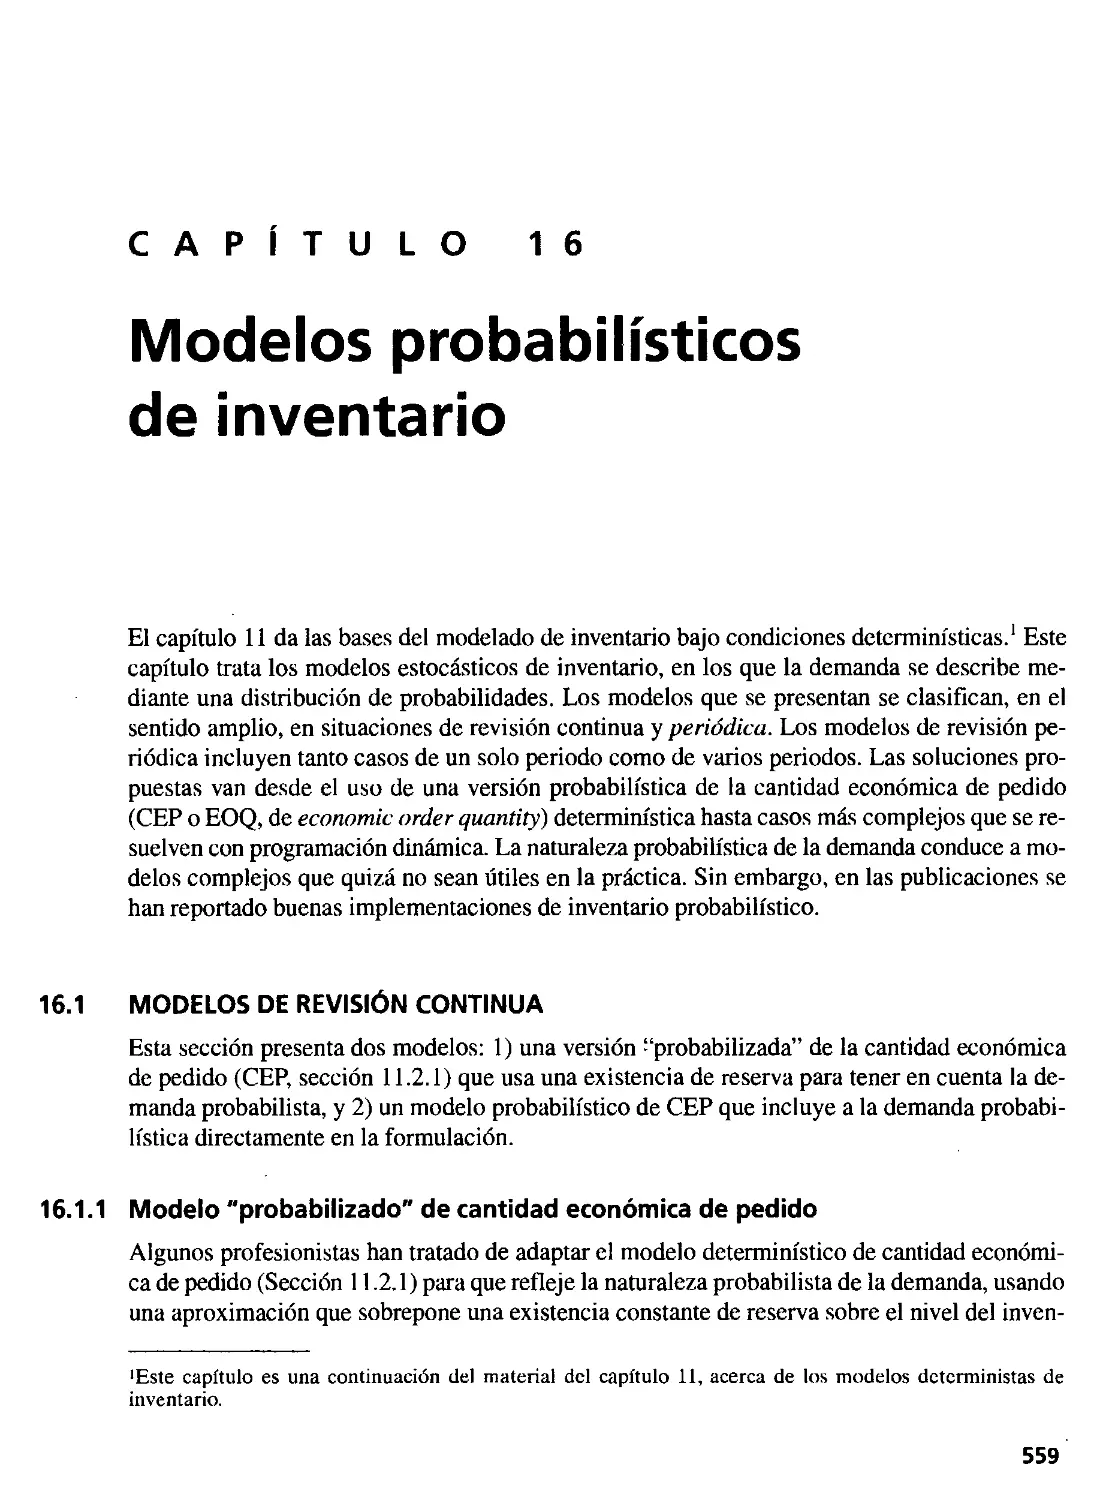 16. Modelos probabilísticos de inventario